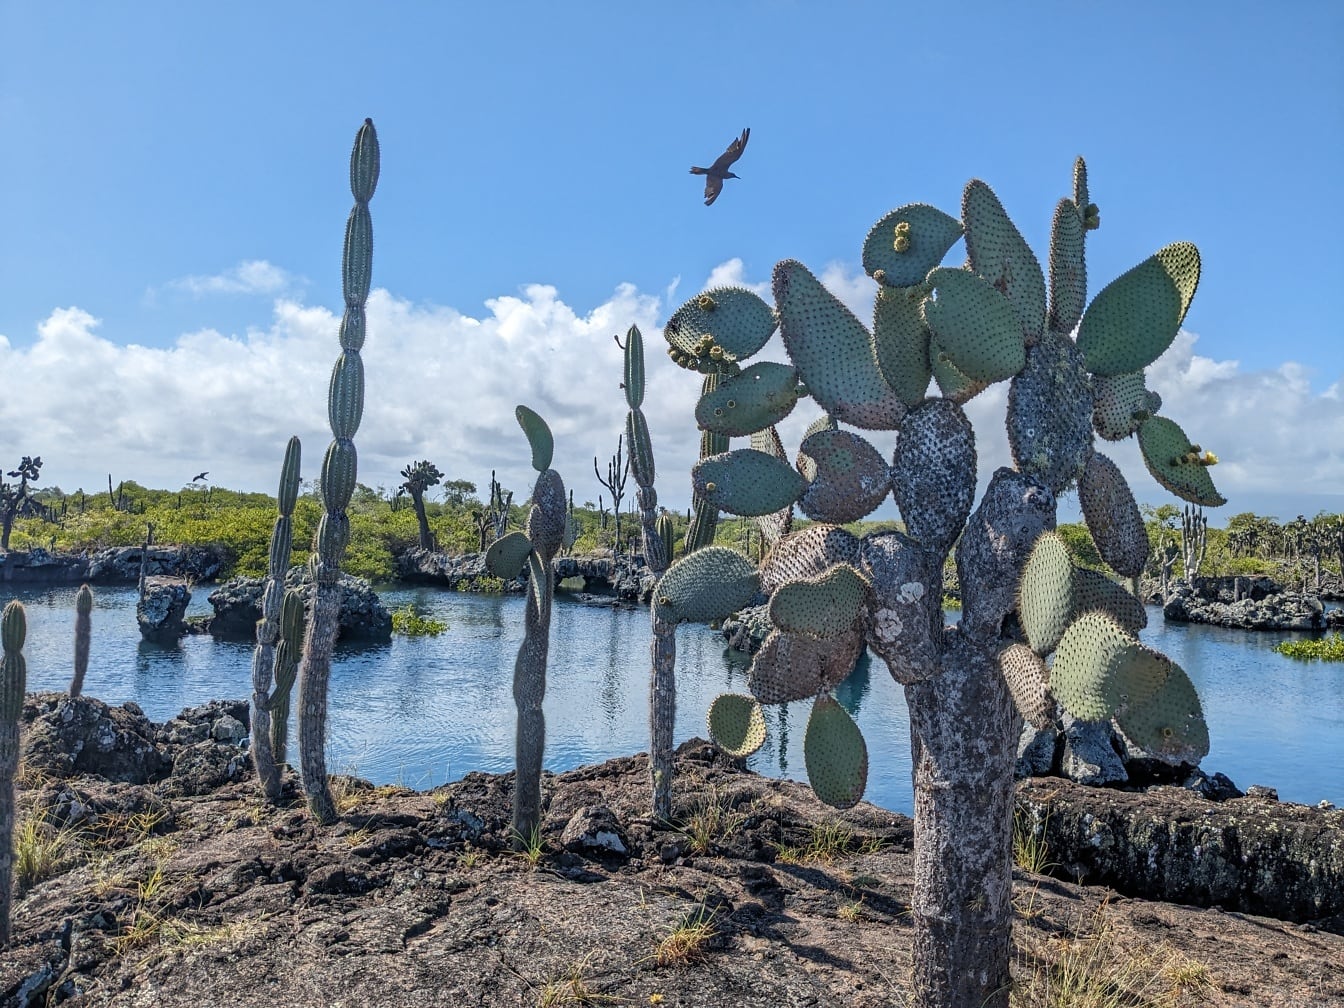 Bodljikava kruška (Opuntia galapageia) suptropska vrsta kaktusa endemična za Galapagos